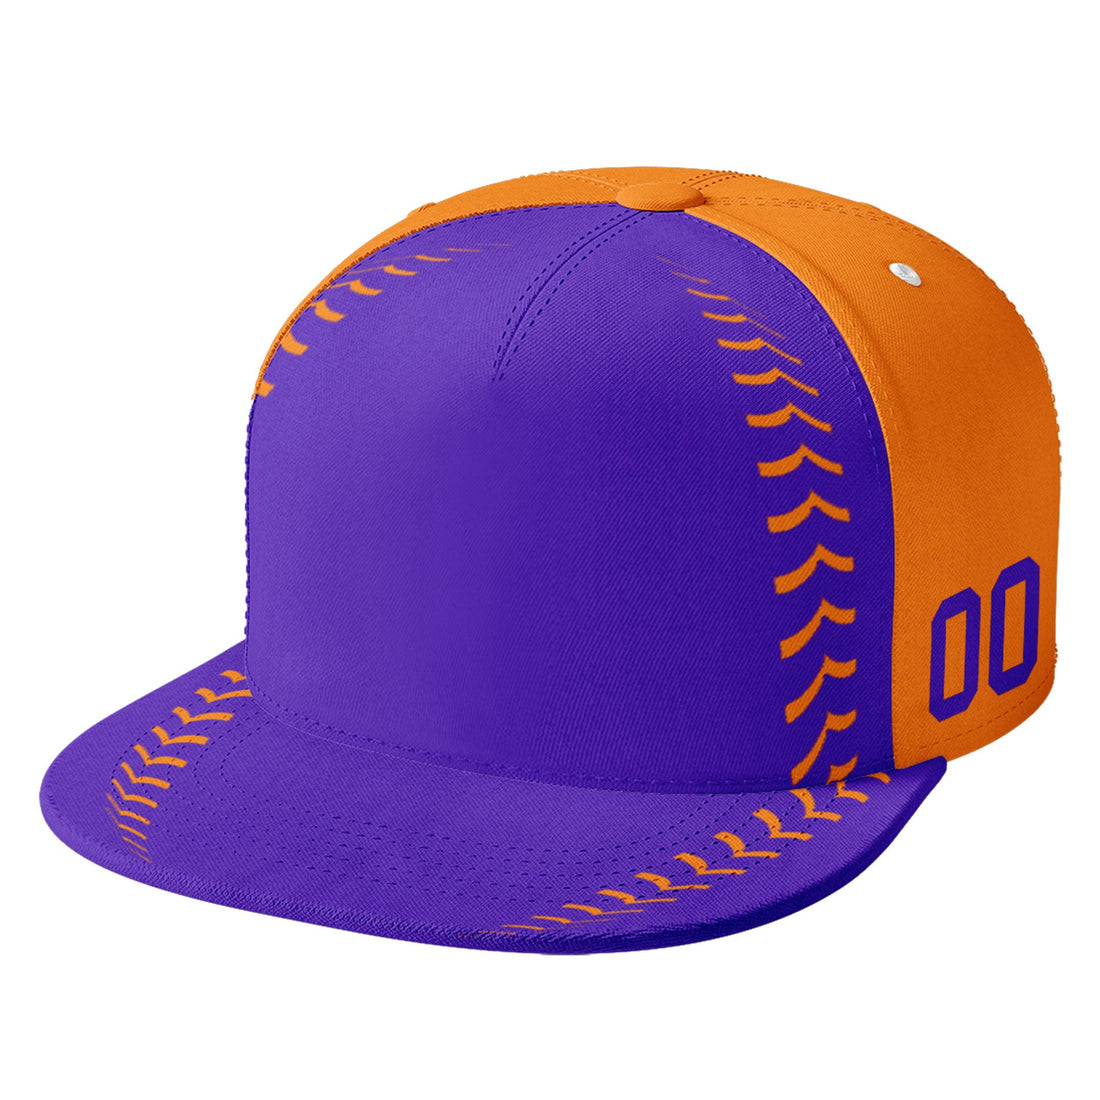 Custom Sport Design Hat Stitched Adjustable Snapback Personalized Baseball Cap PR067B-bd0b00d9-cb